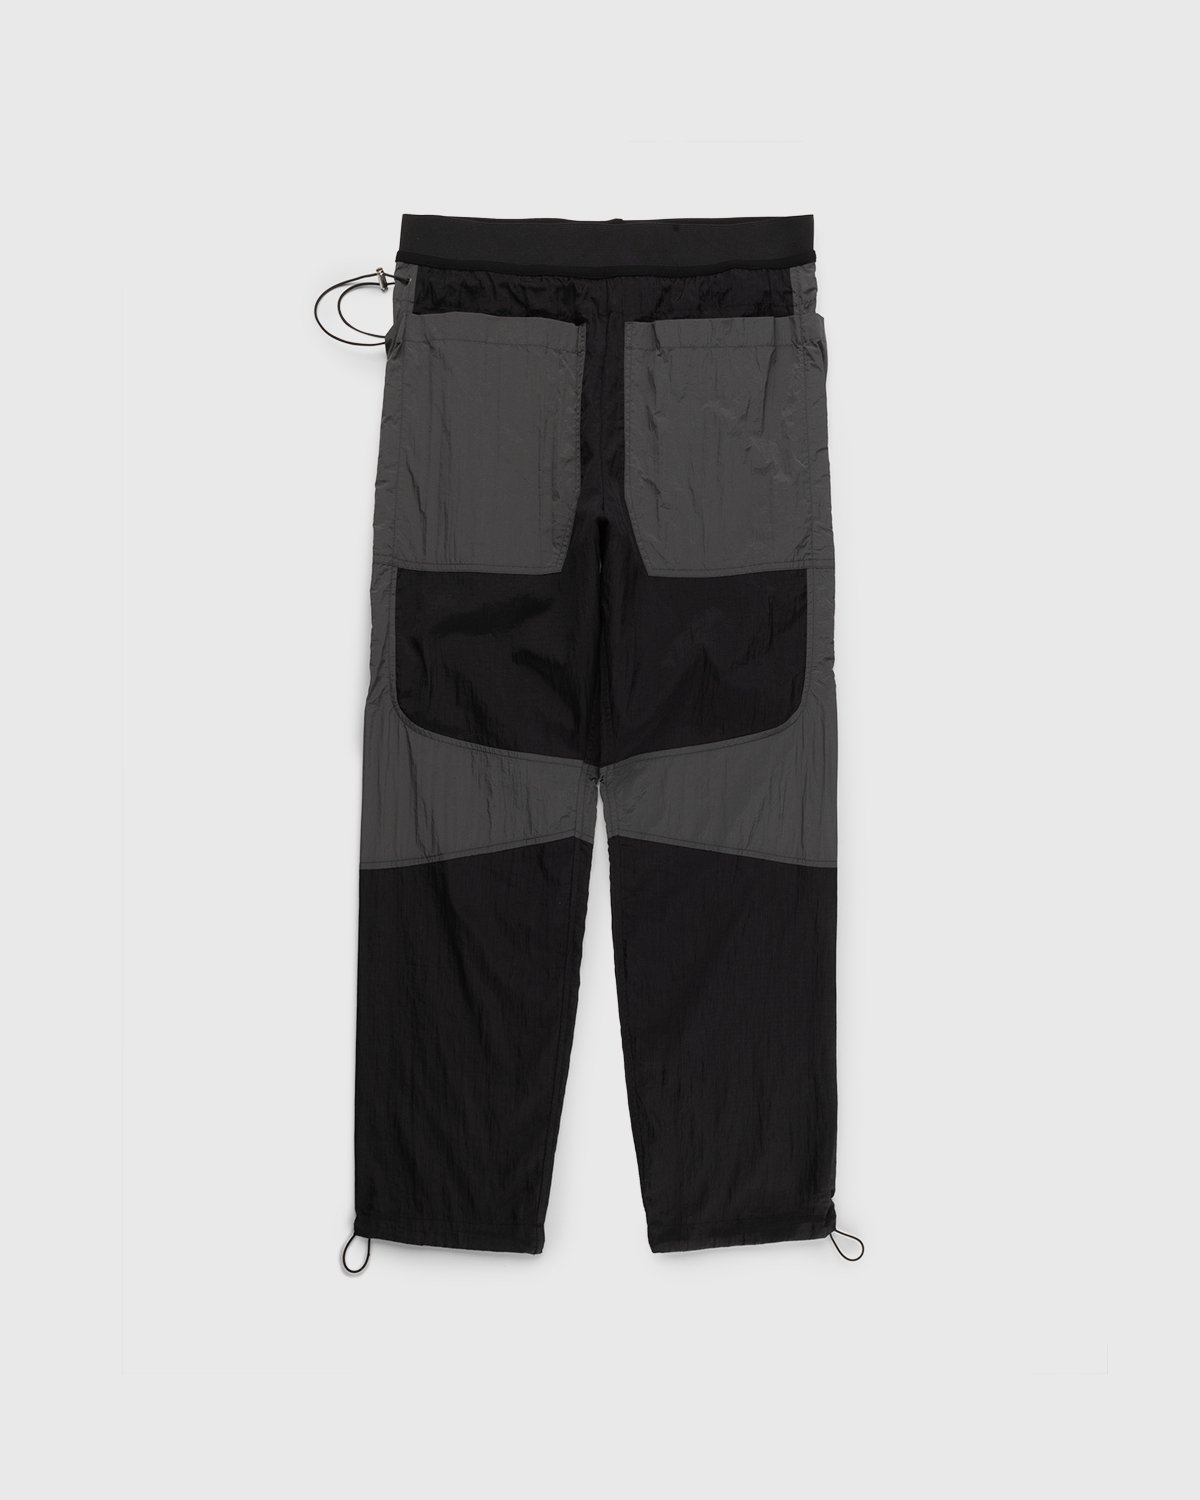 Arnar Mar Jonsson - Oroi Paneled Trouser Black/Charcoal - Clothing - Brown - Image 2